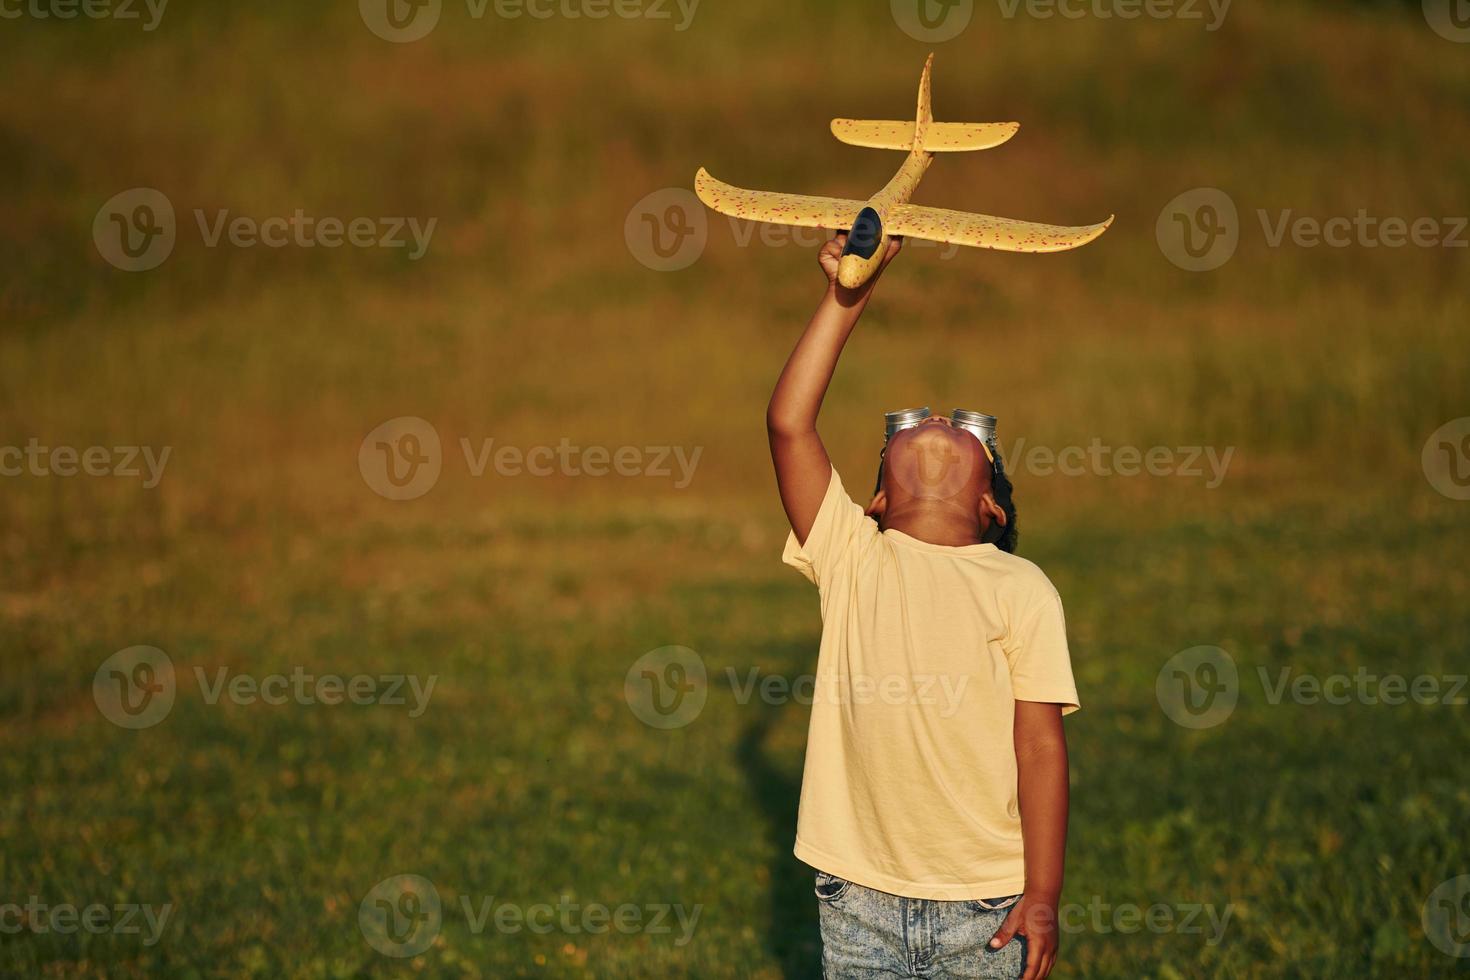 retro stil pilot solglasögon. afrikansk amerikan unge ha roligt i de fält på sommar dagtid foto